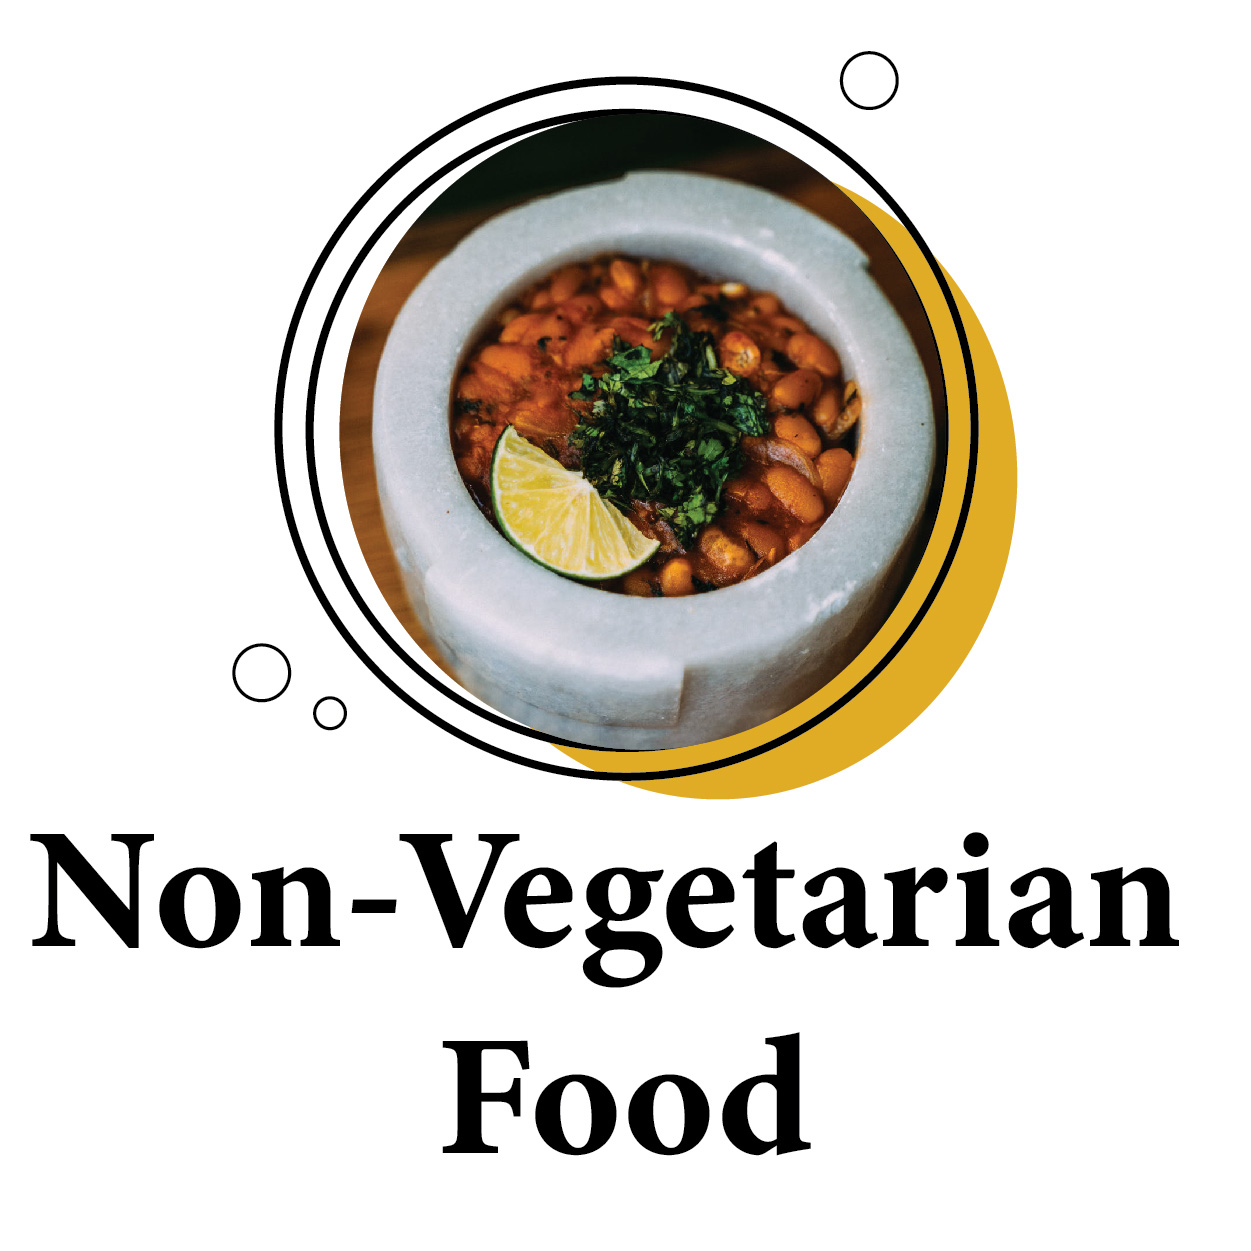 Non-vegetarian Food